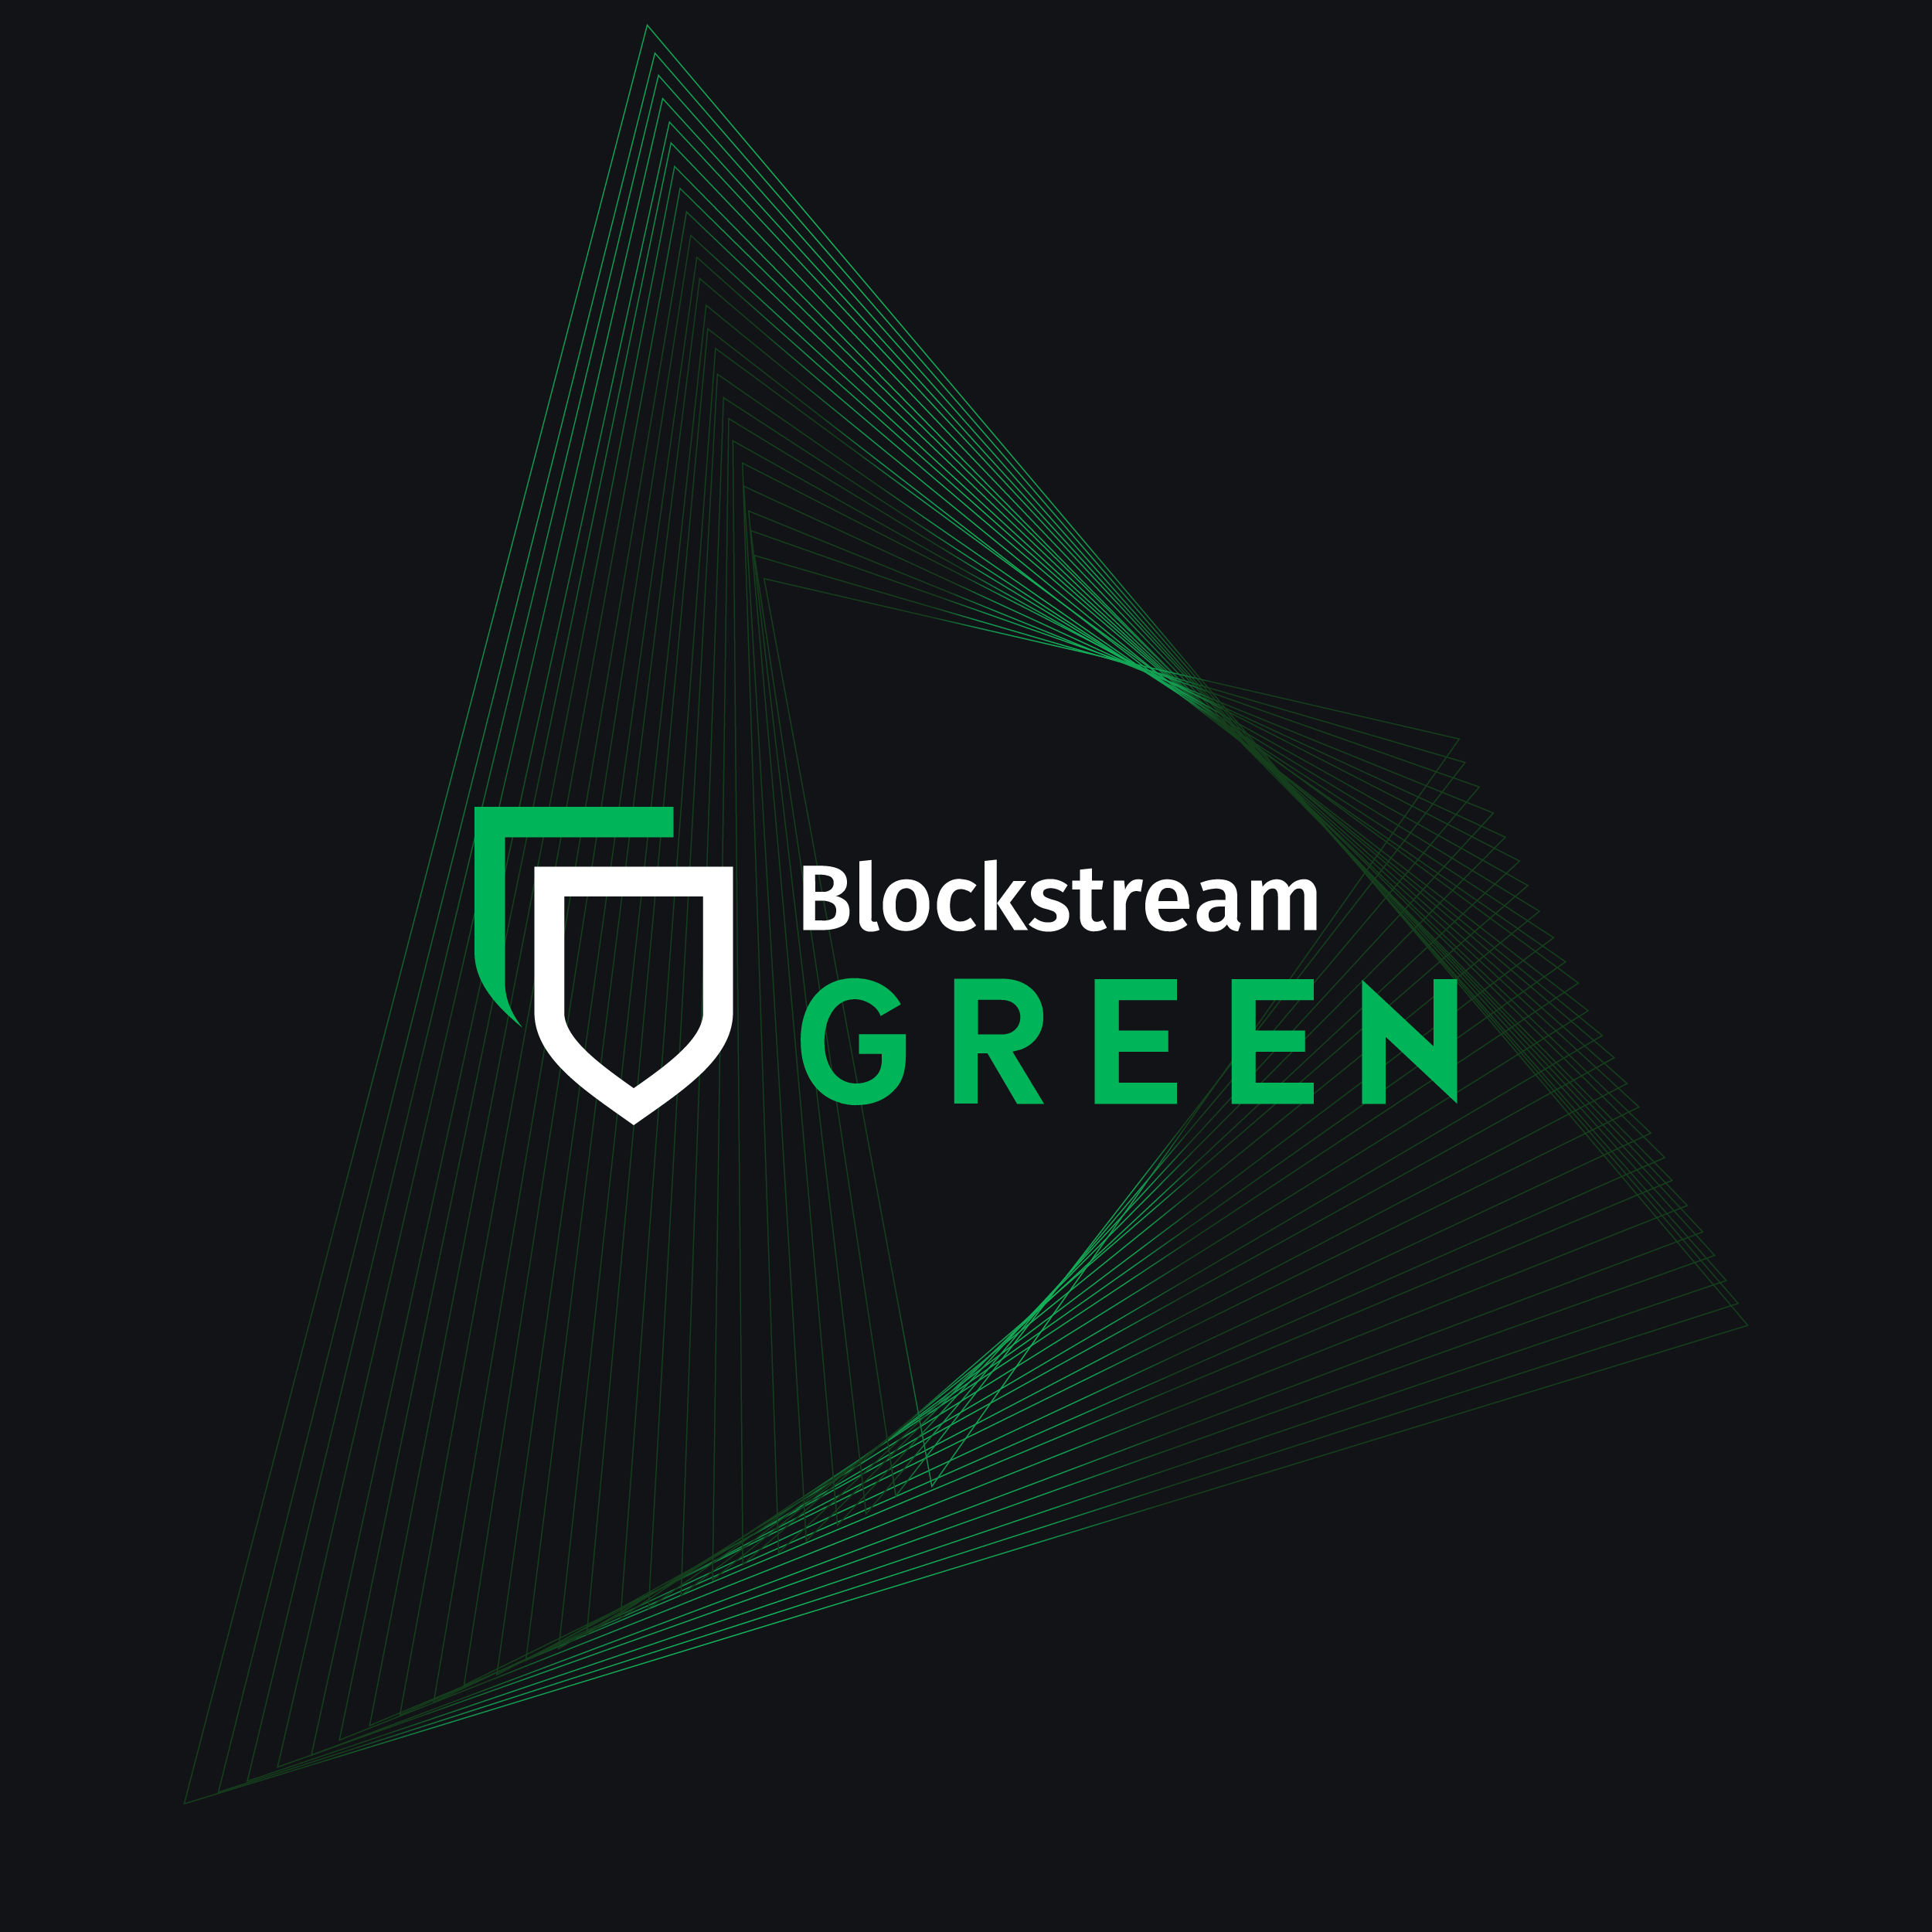 Blockstream-green.png